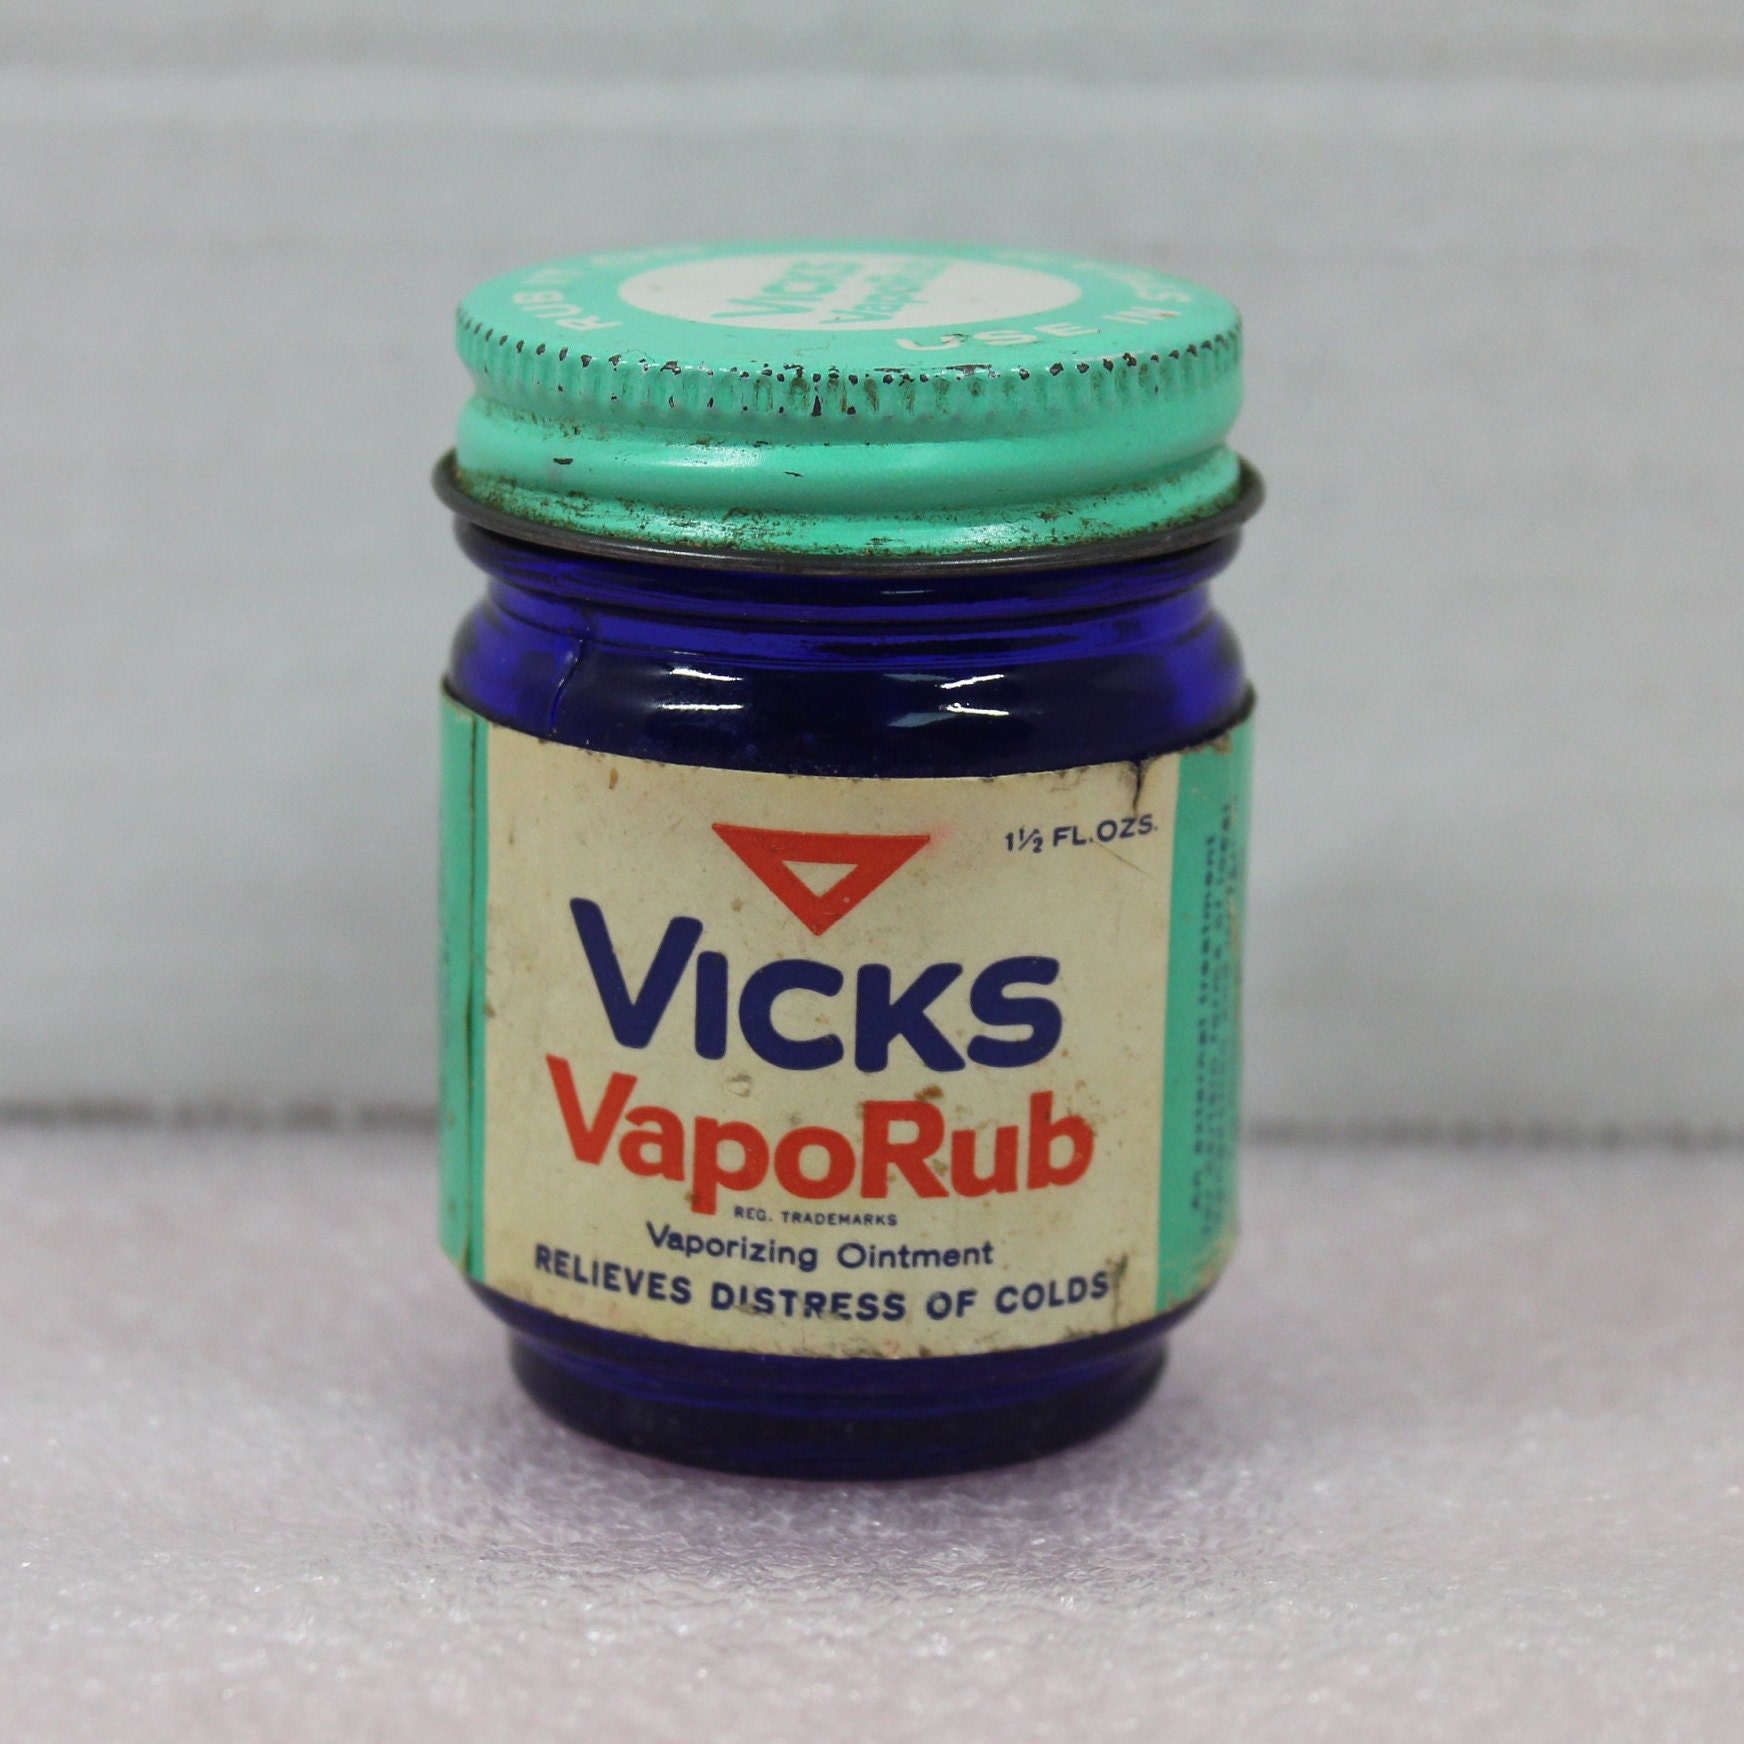 Vicks® VapoRub® Ointment, 1.75 Oz Jar